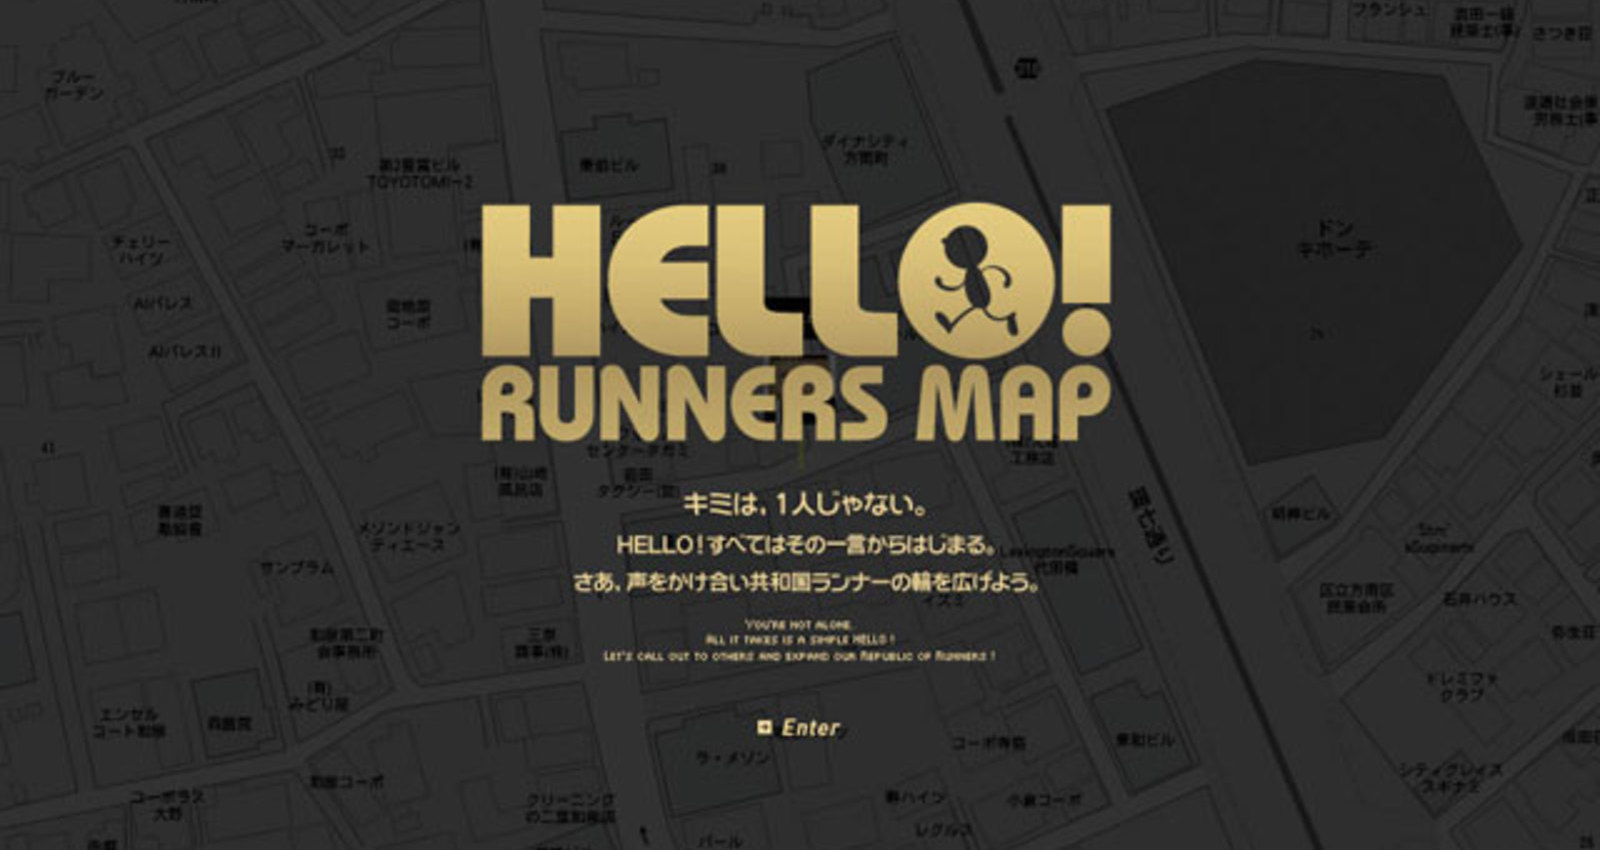 HELLO! RUNNERS MAP